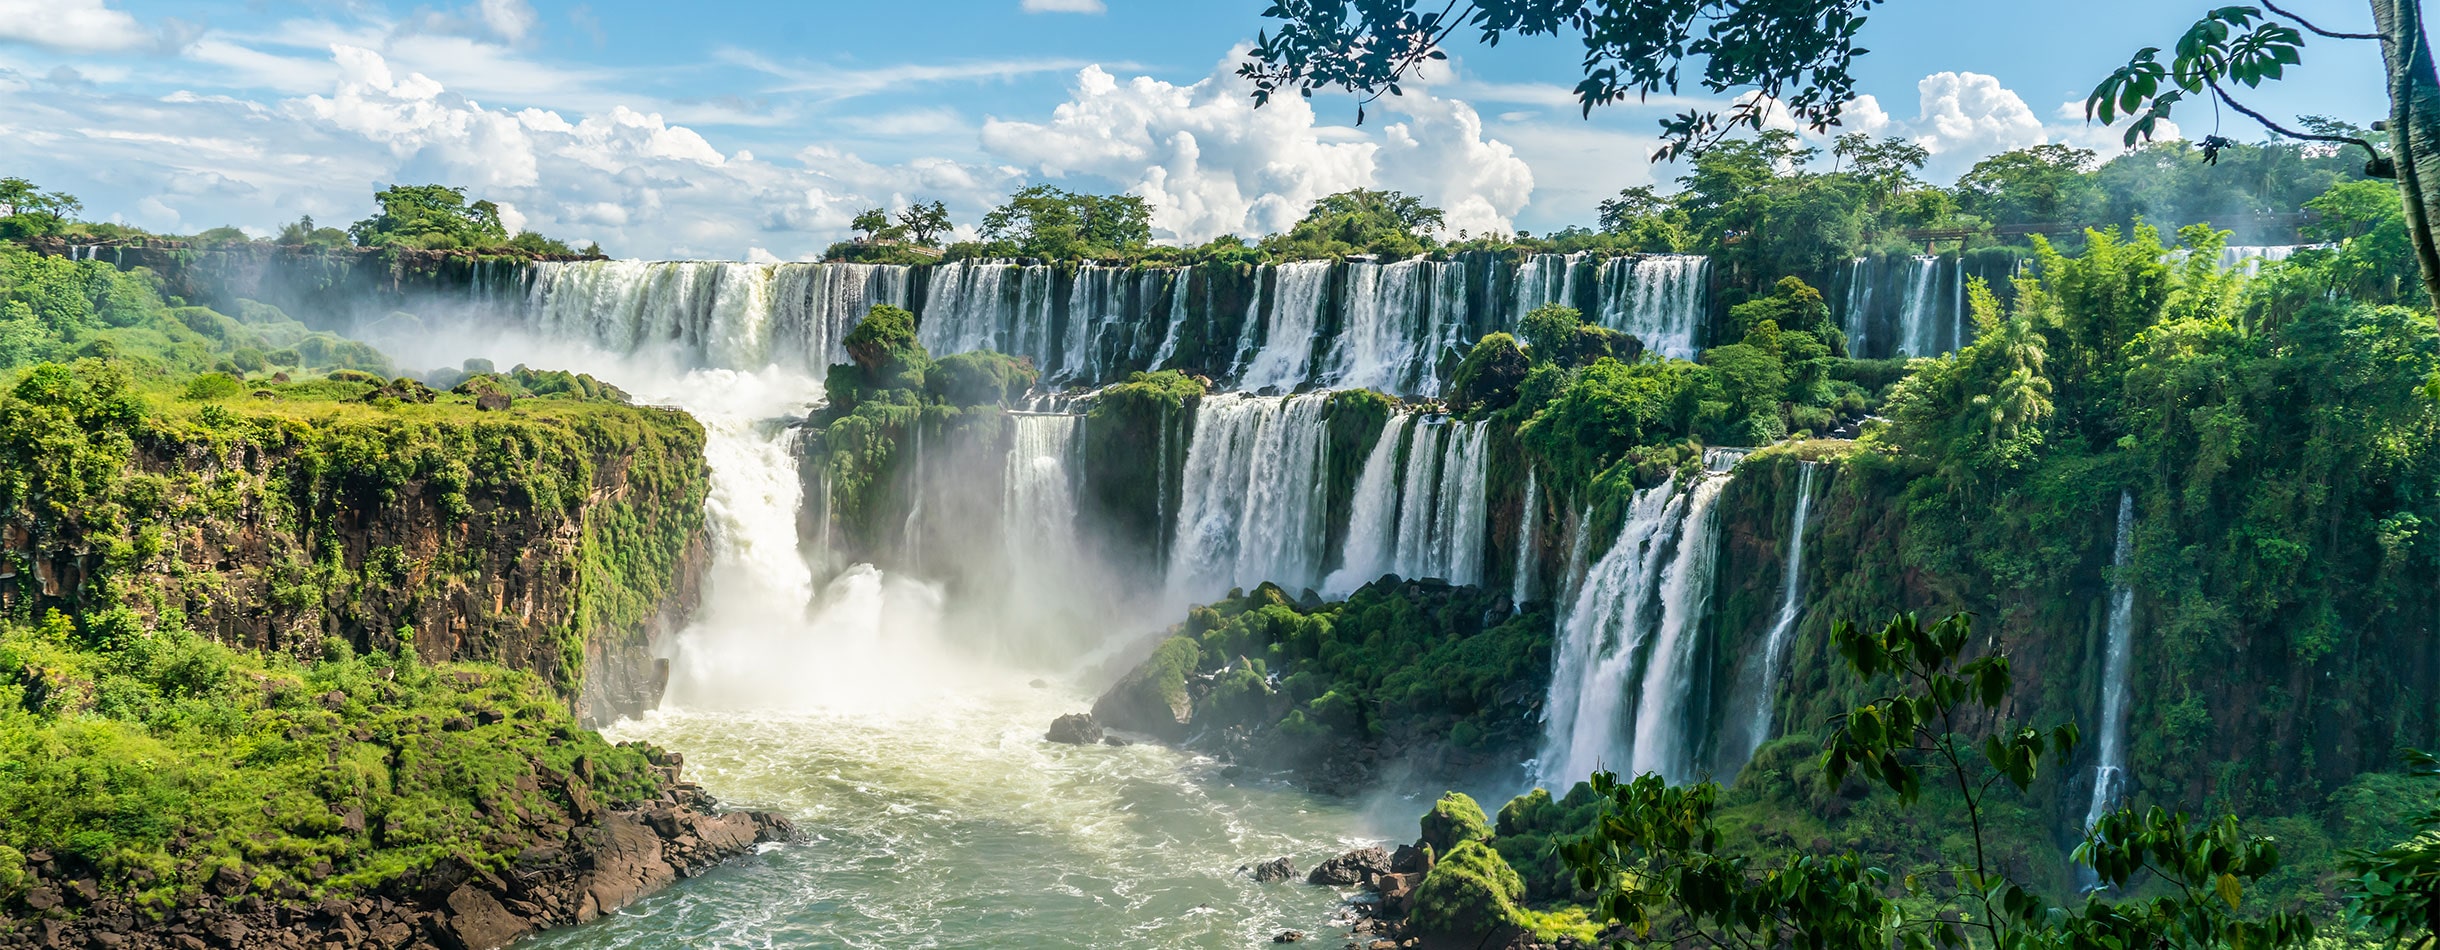 Spectacular waterfall, Brazil